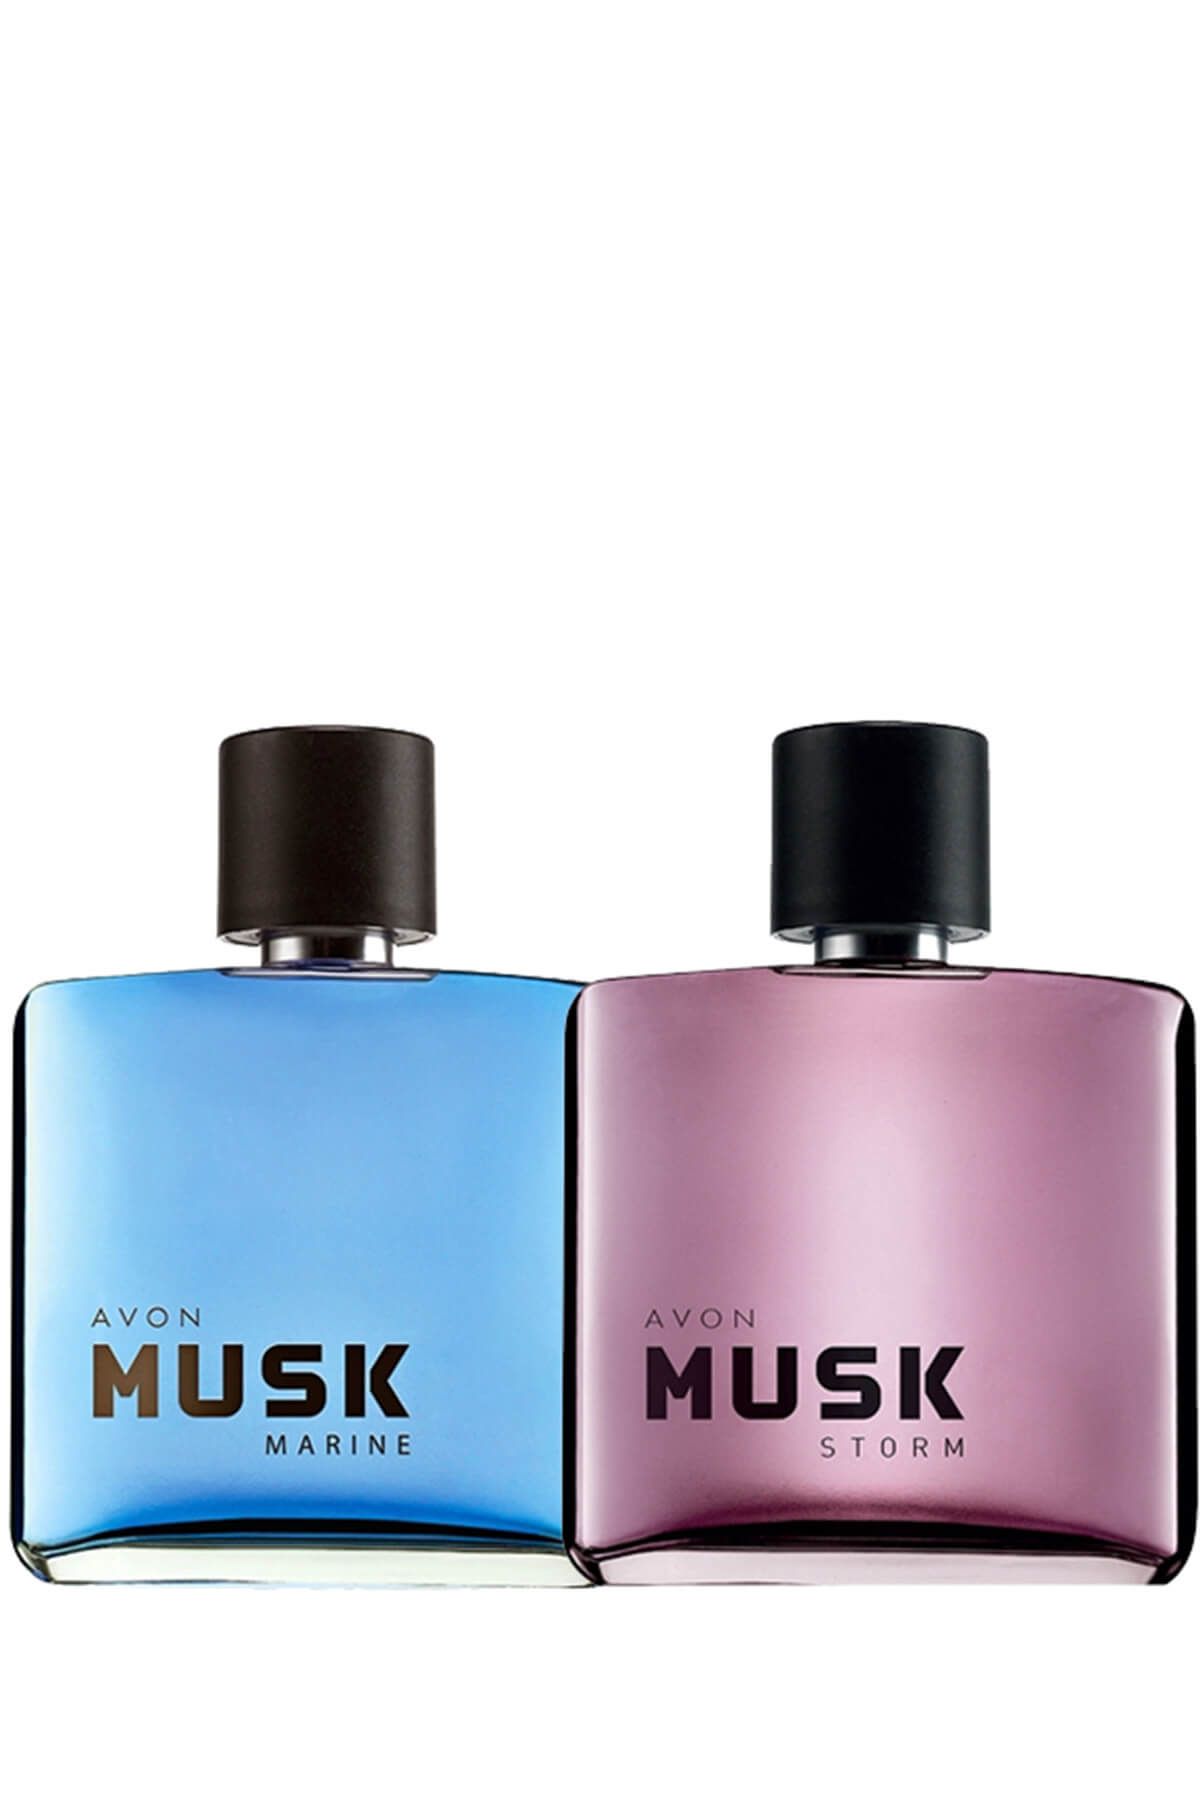 Avon Musk Marine & Musk Storm Erkek Parfüm Seti 5050000000420